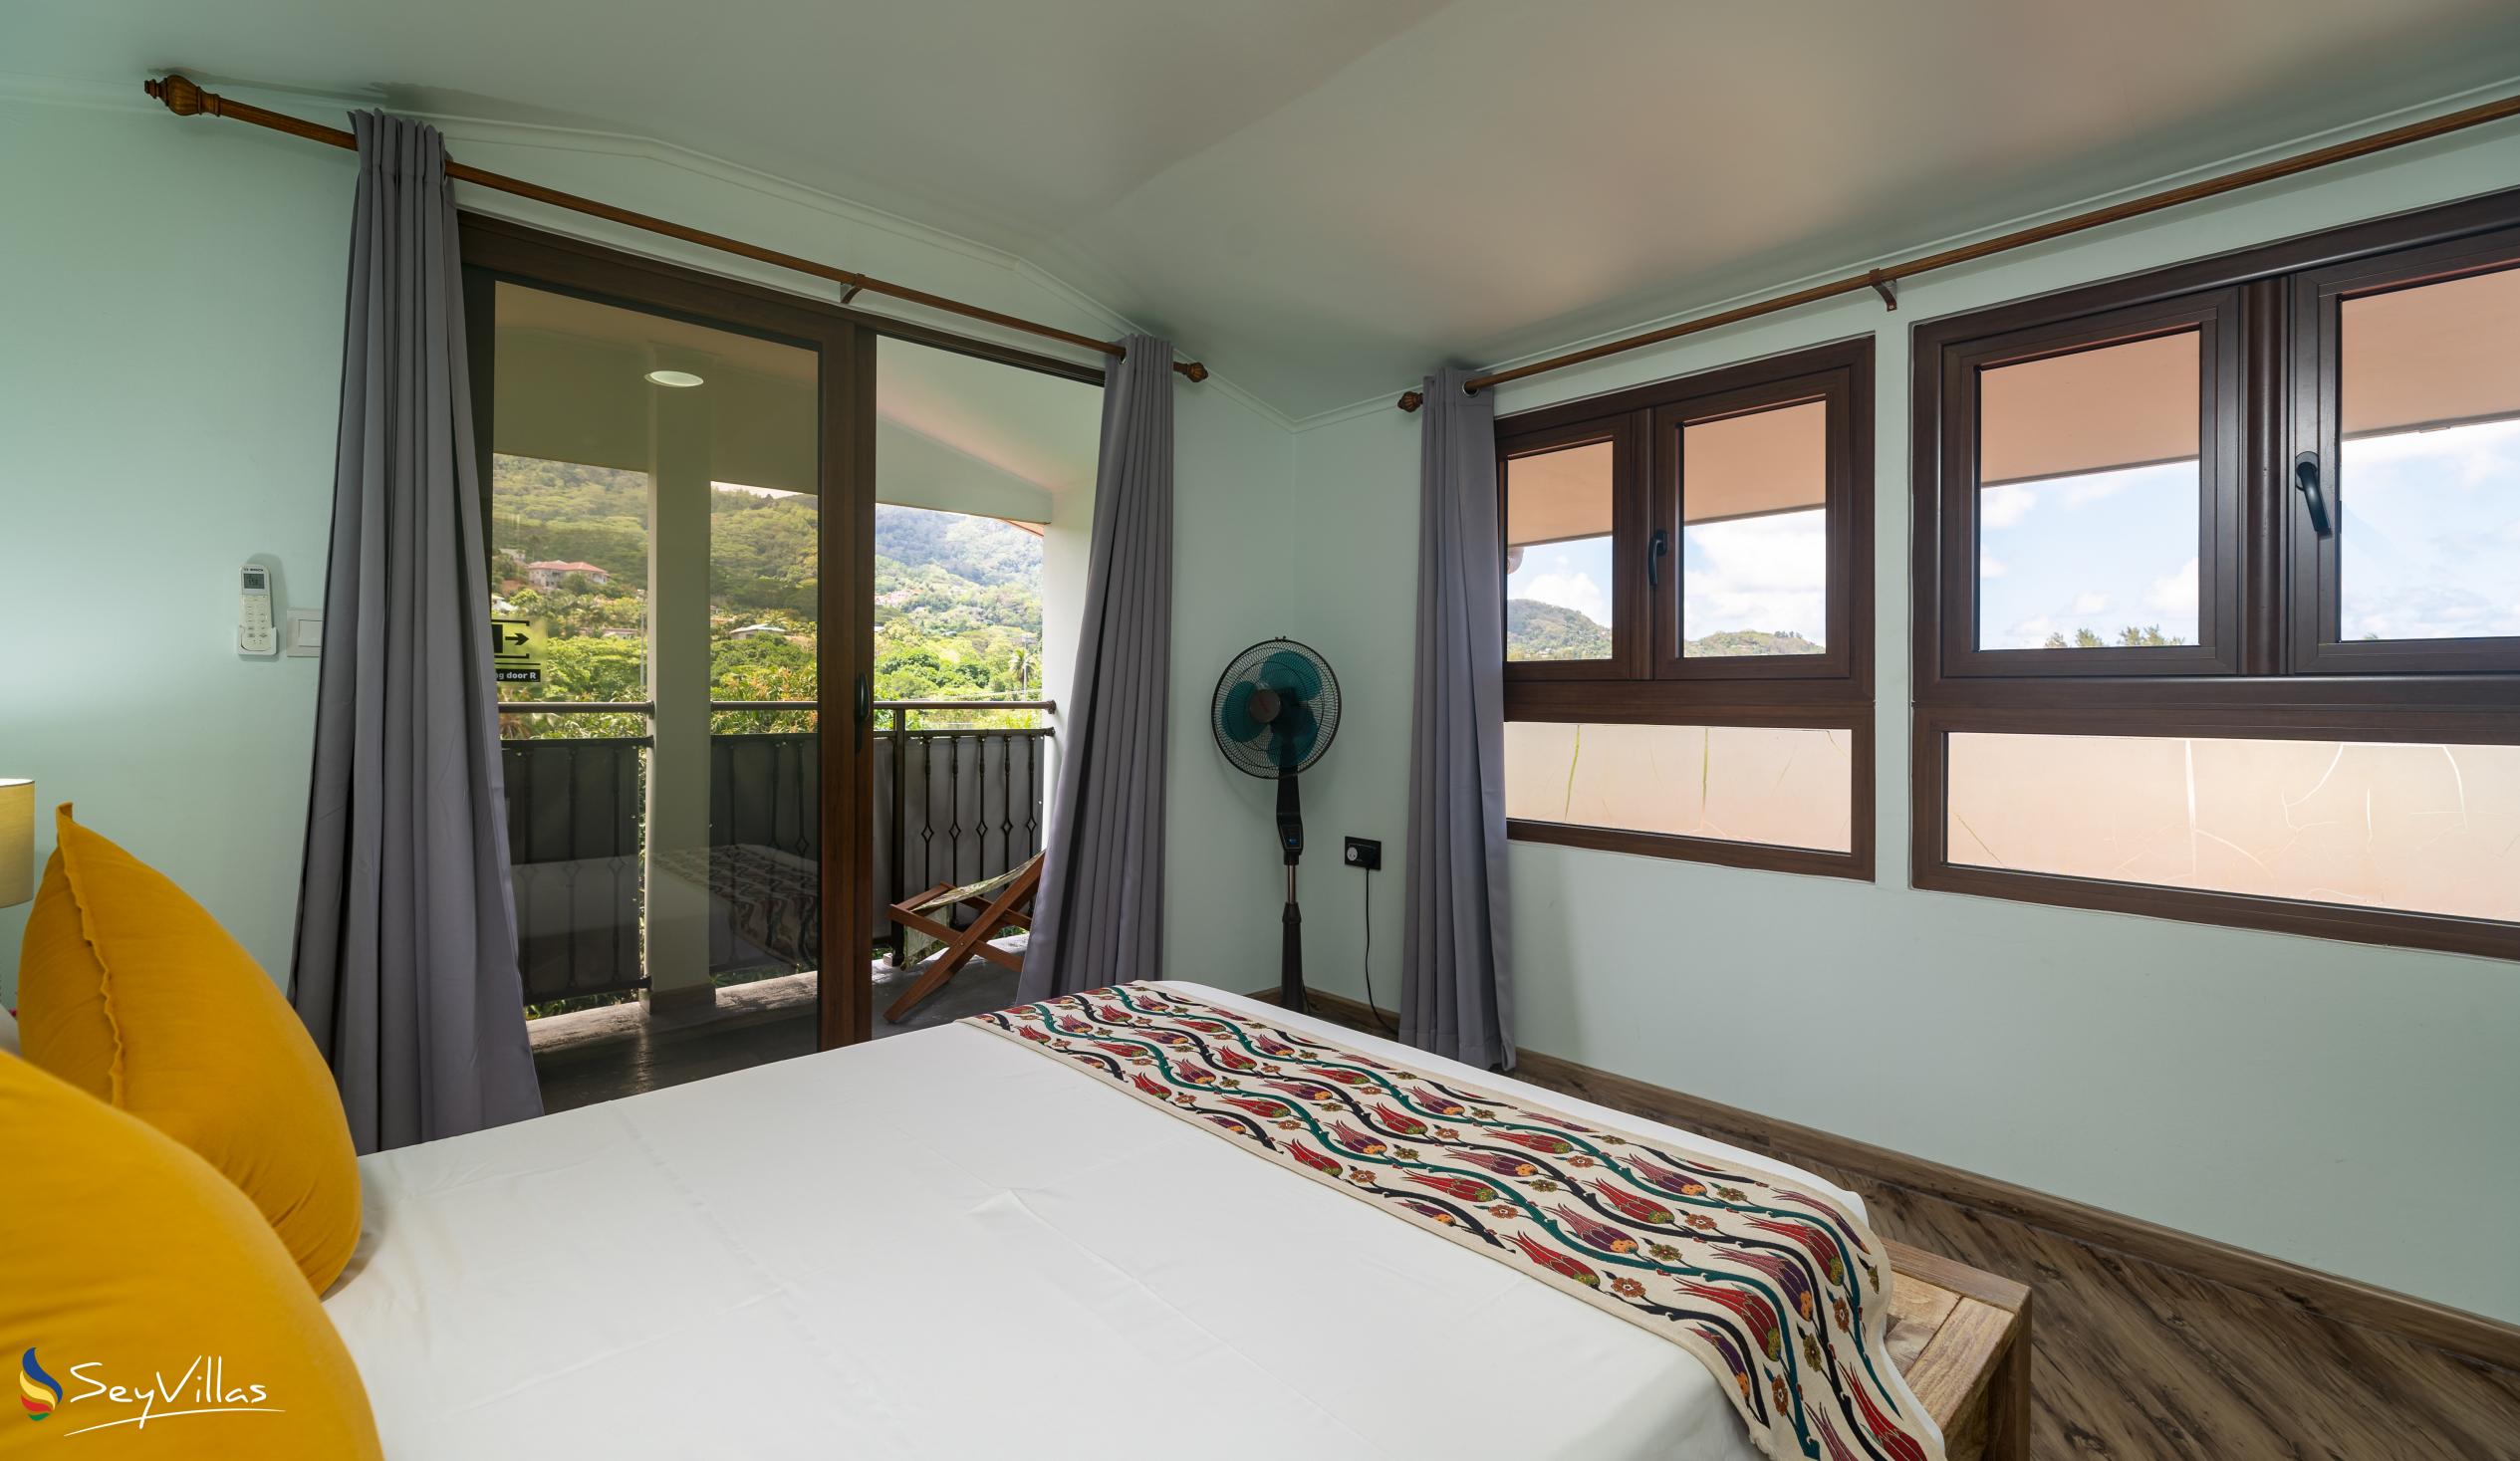 Photo 68: Cap-Sud Self Catering - 3-Bedroom Apartment - Mahé (Seychelles)